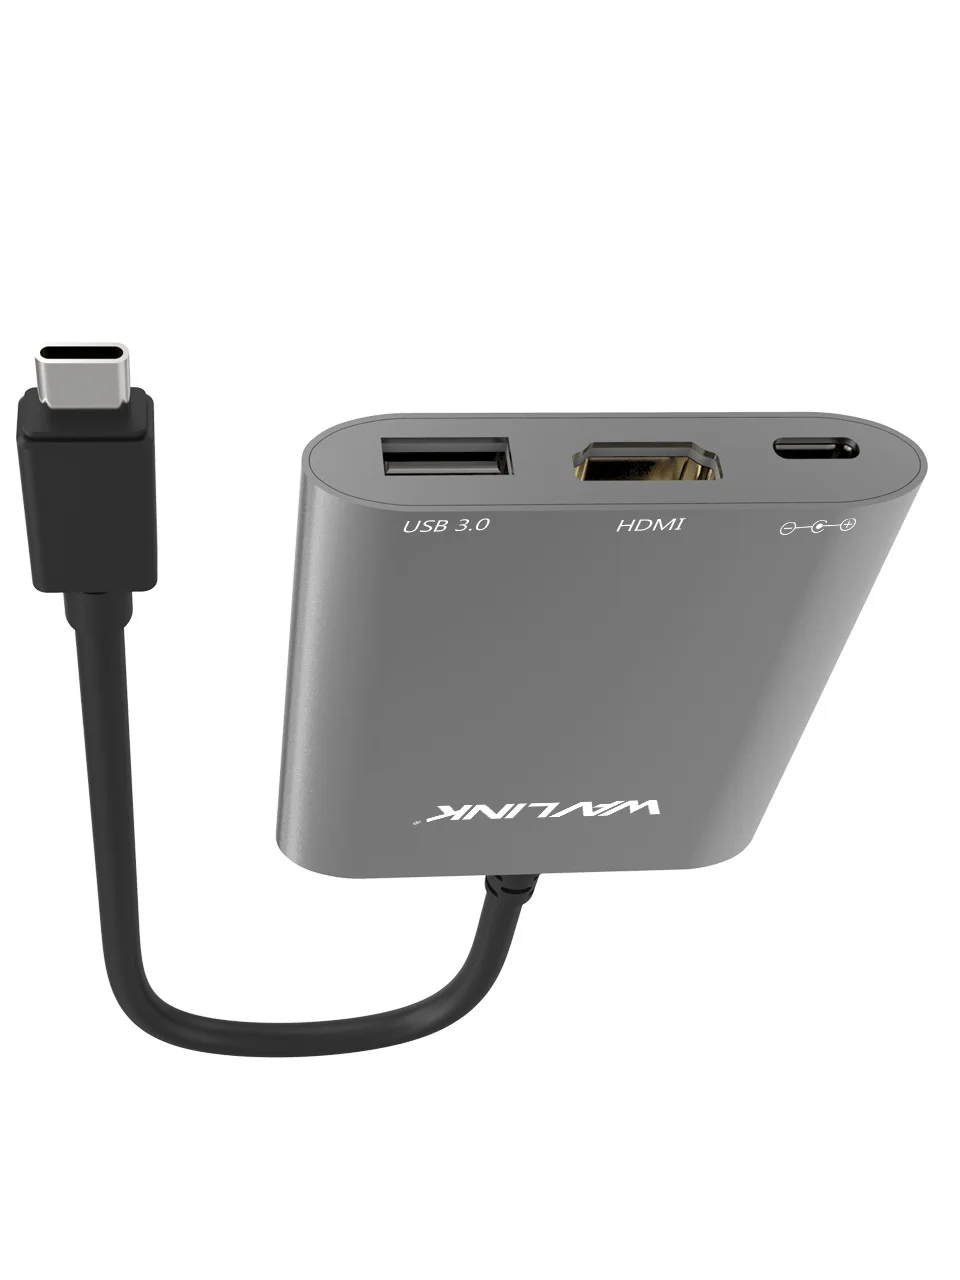 Wavlink Aluminum USB C Hub External Power USB 3.1 USB C Gen 2 Hub Super Speed Type C 2 Port Hub with HDMI 4K and Power Delivery